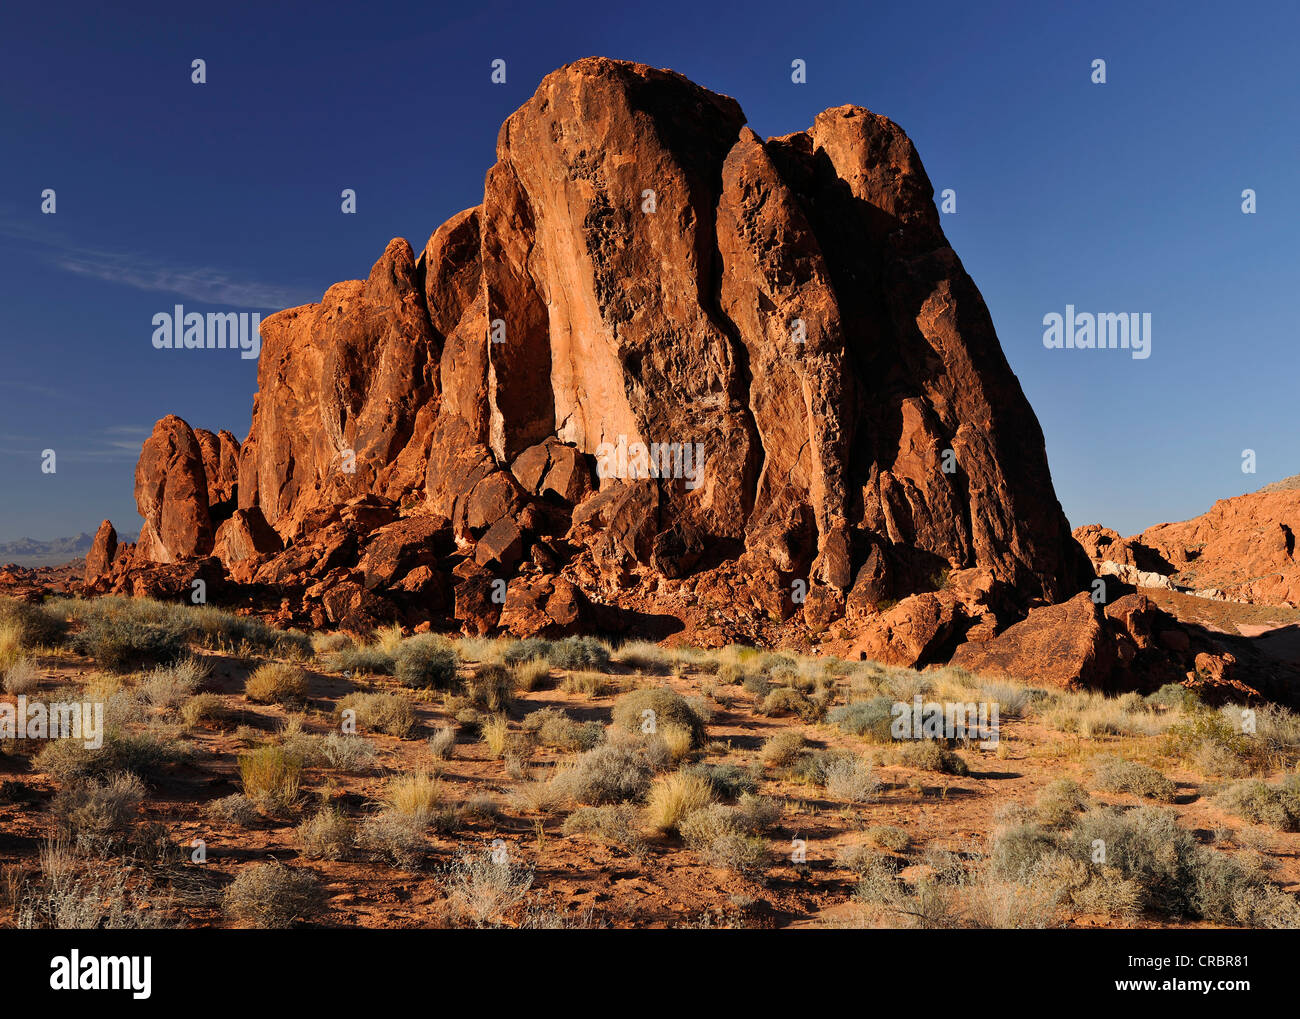 Mammoth rock formation, Vallée de Feu Park, Nevada, United States of America, USA Banque D'Images